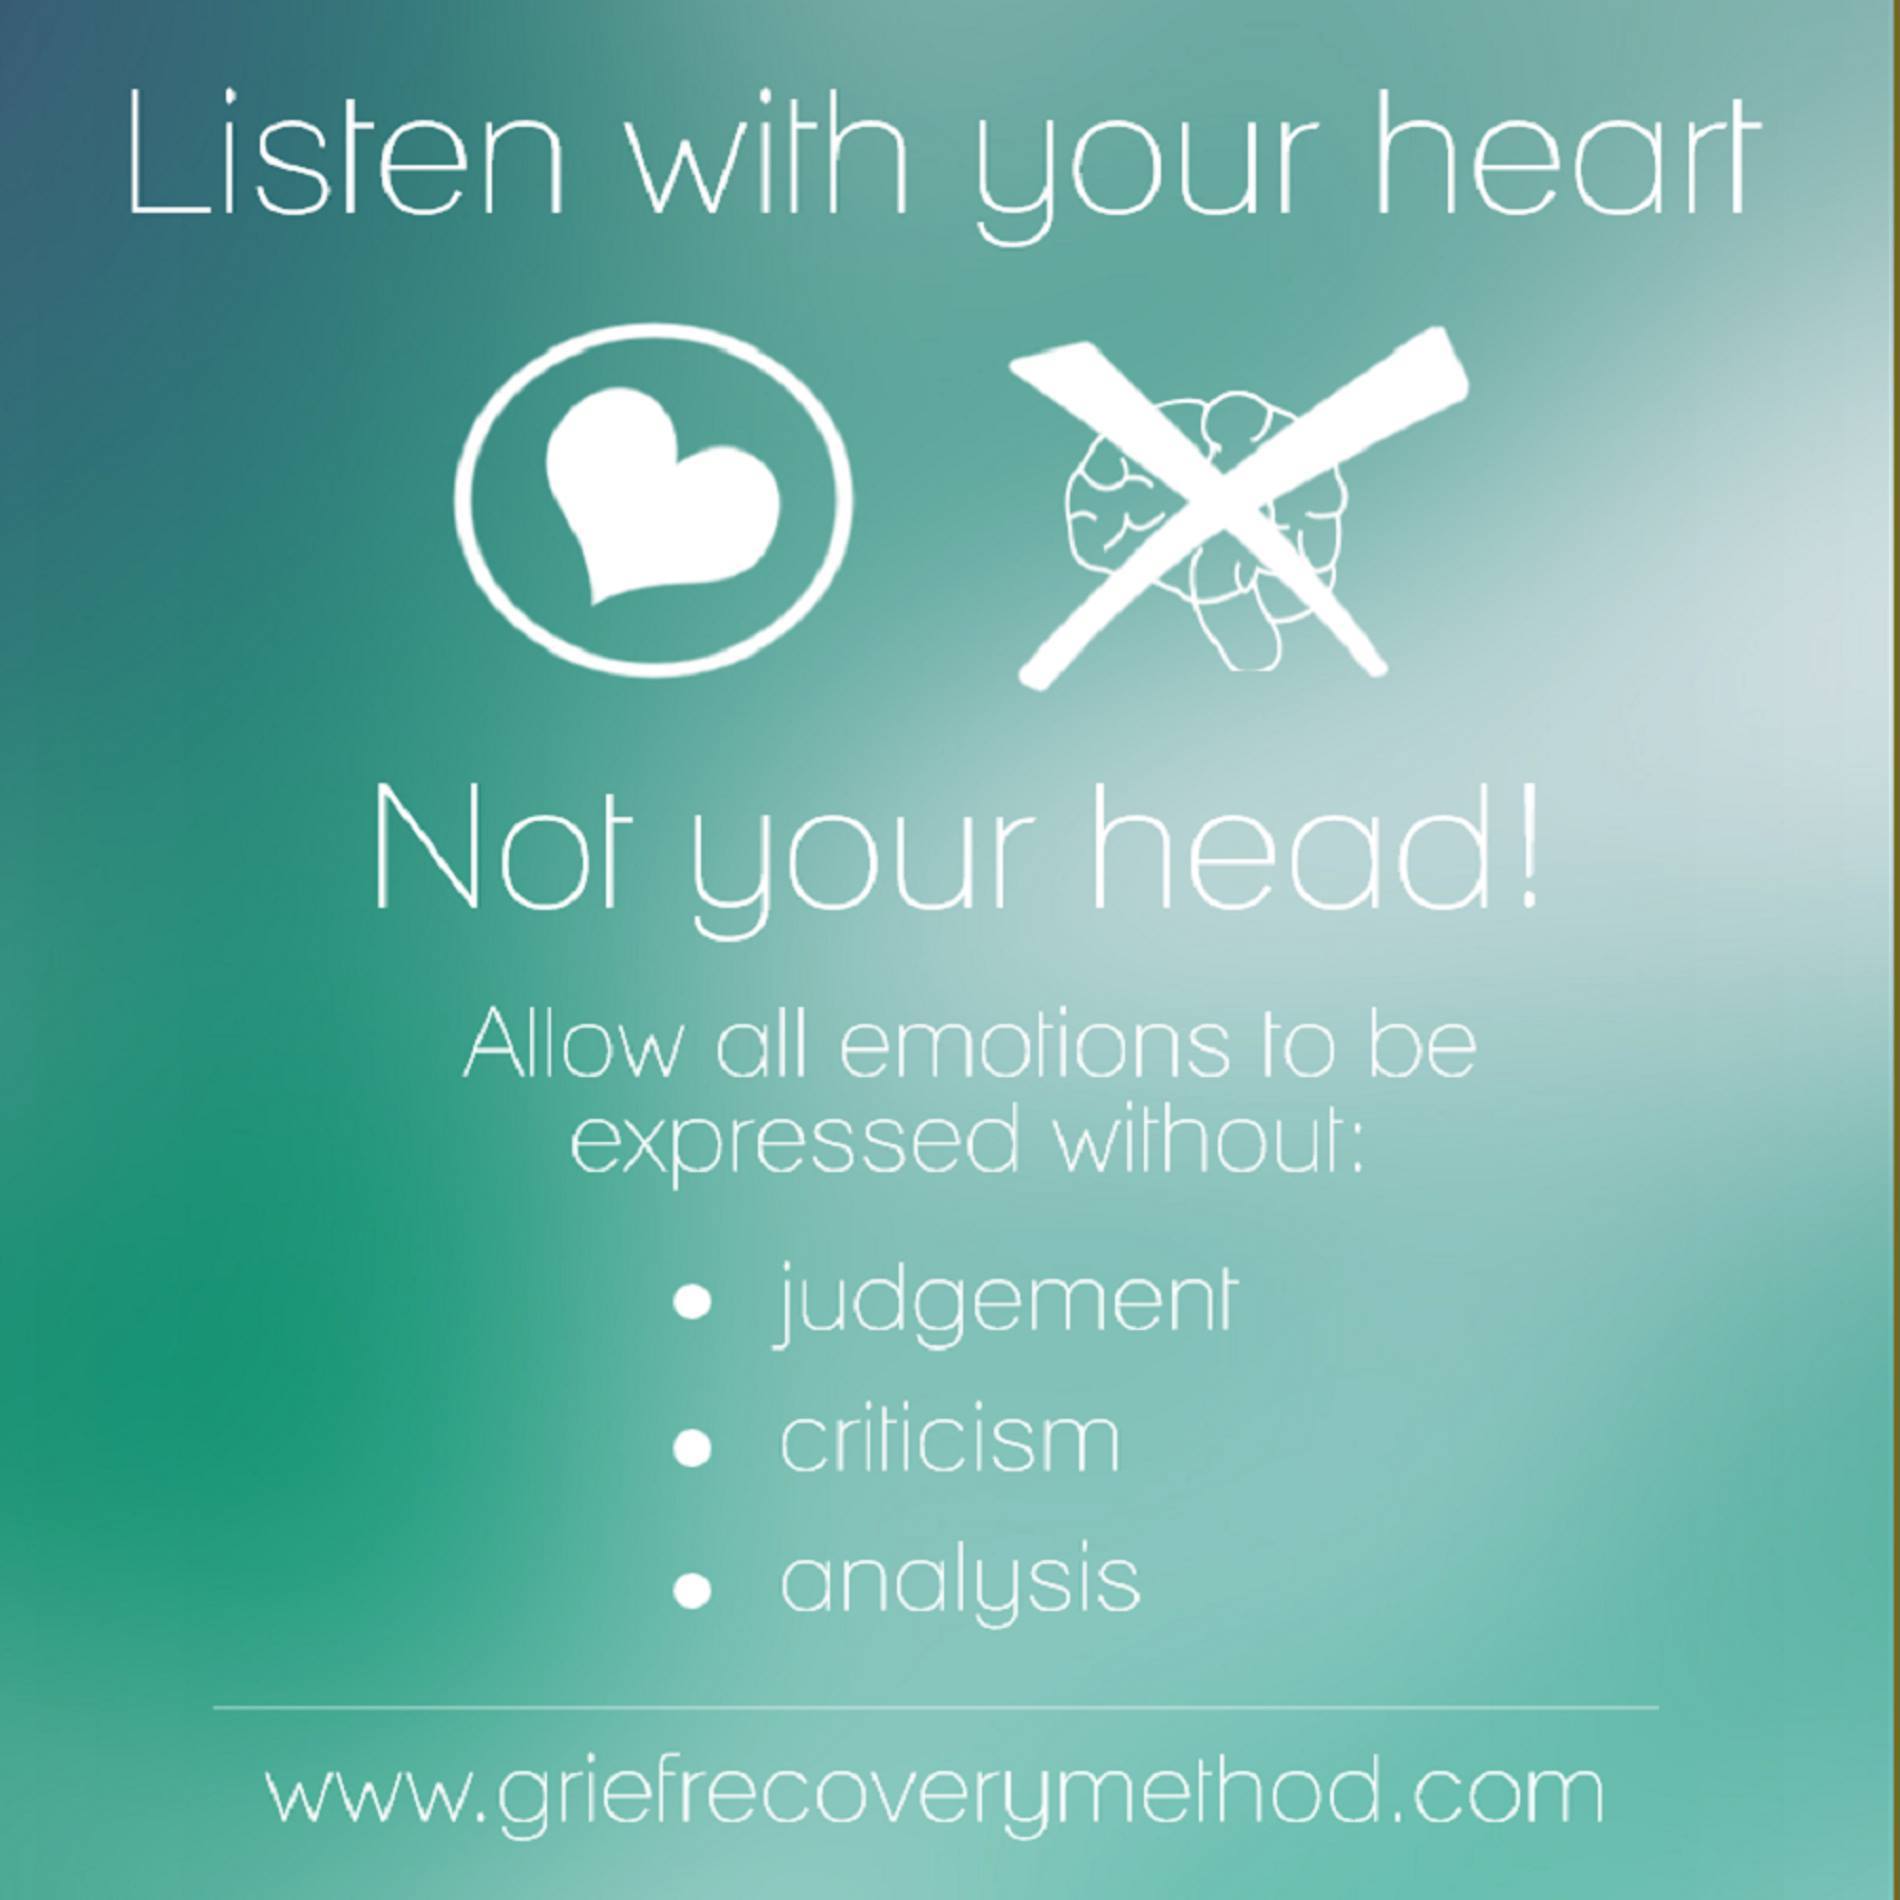 listen with your heart not head-1.jpg